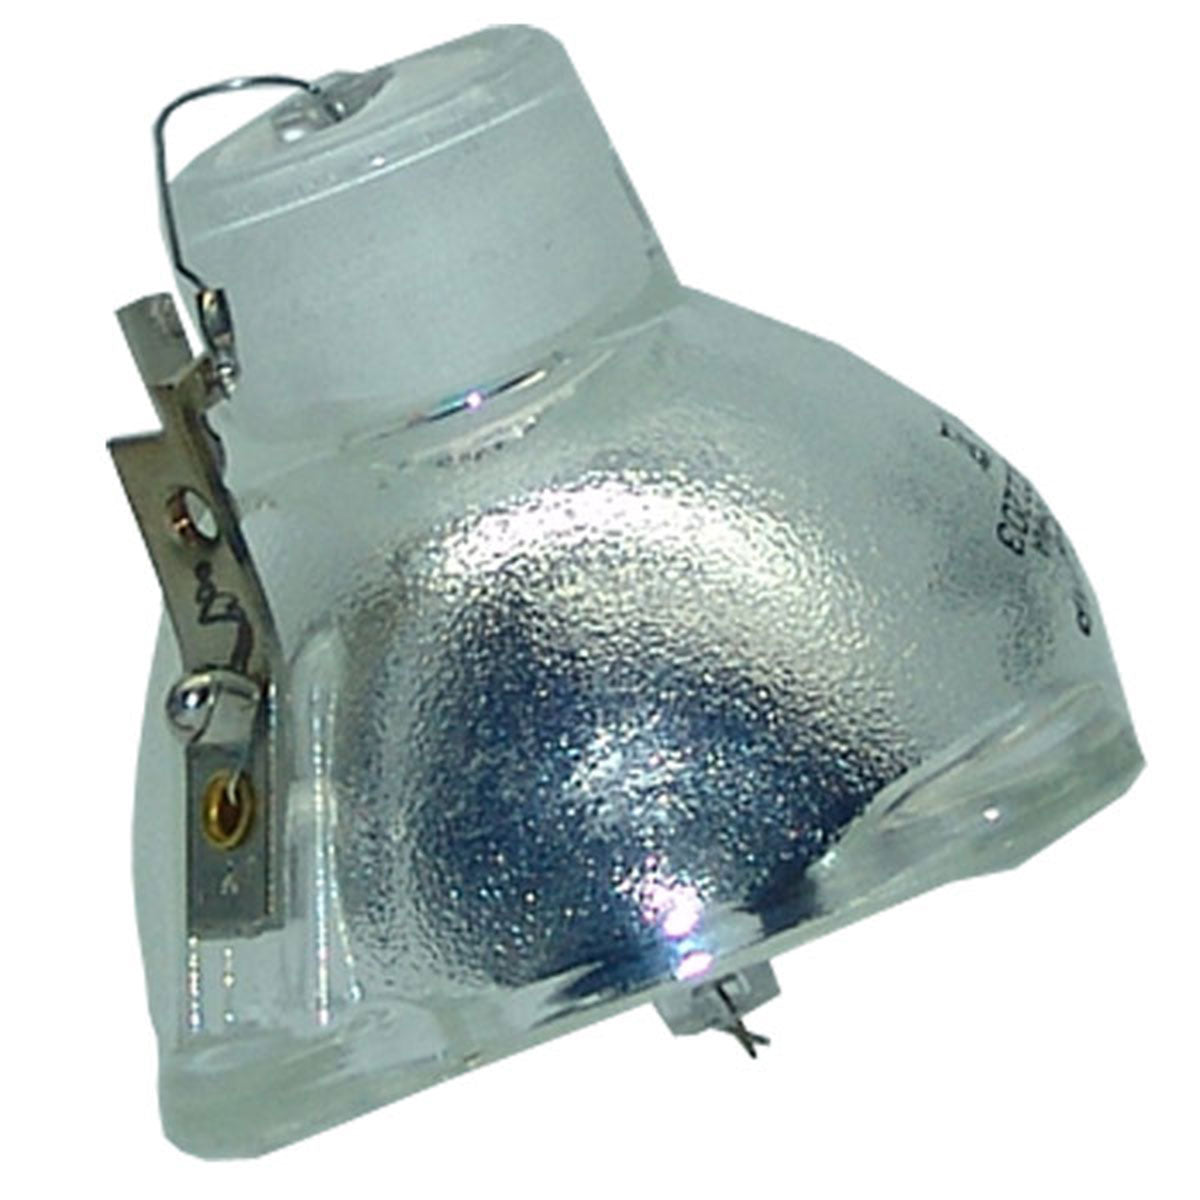 PLUS 28-390 Philips Projector Bare Lamp